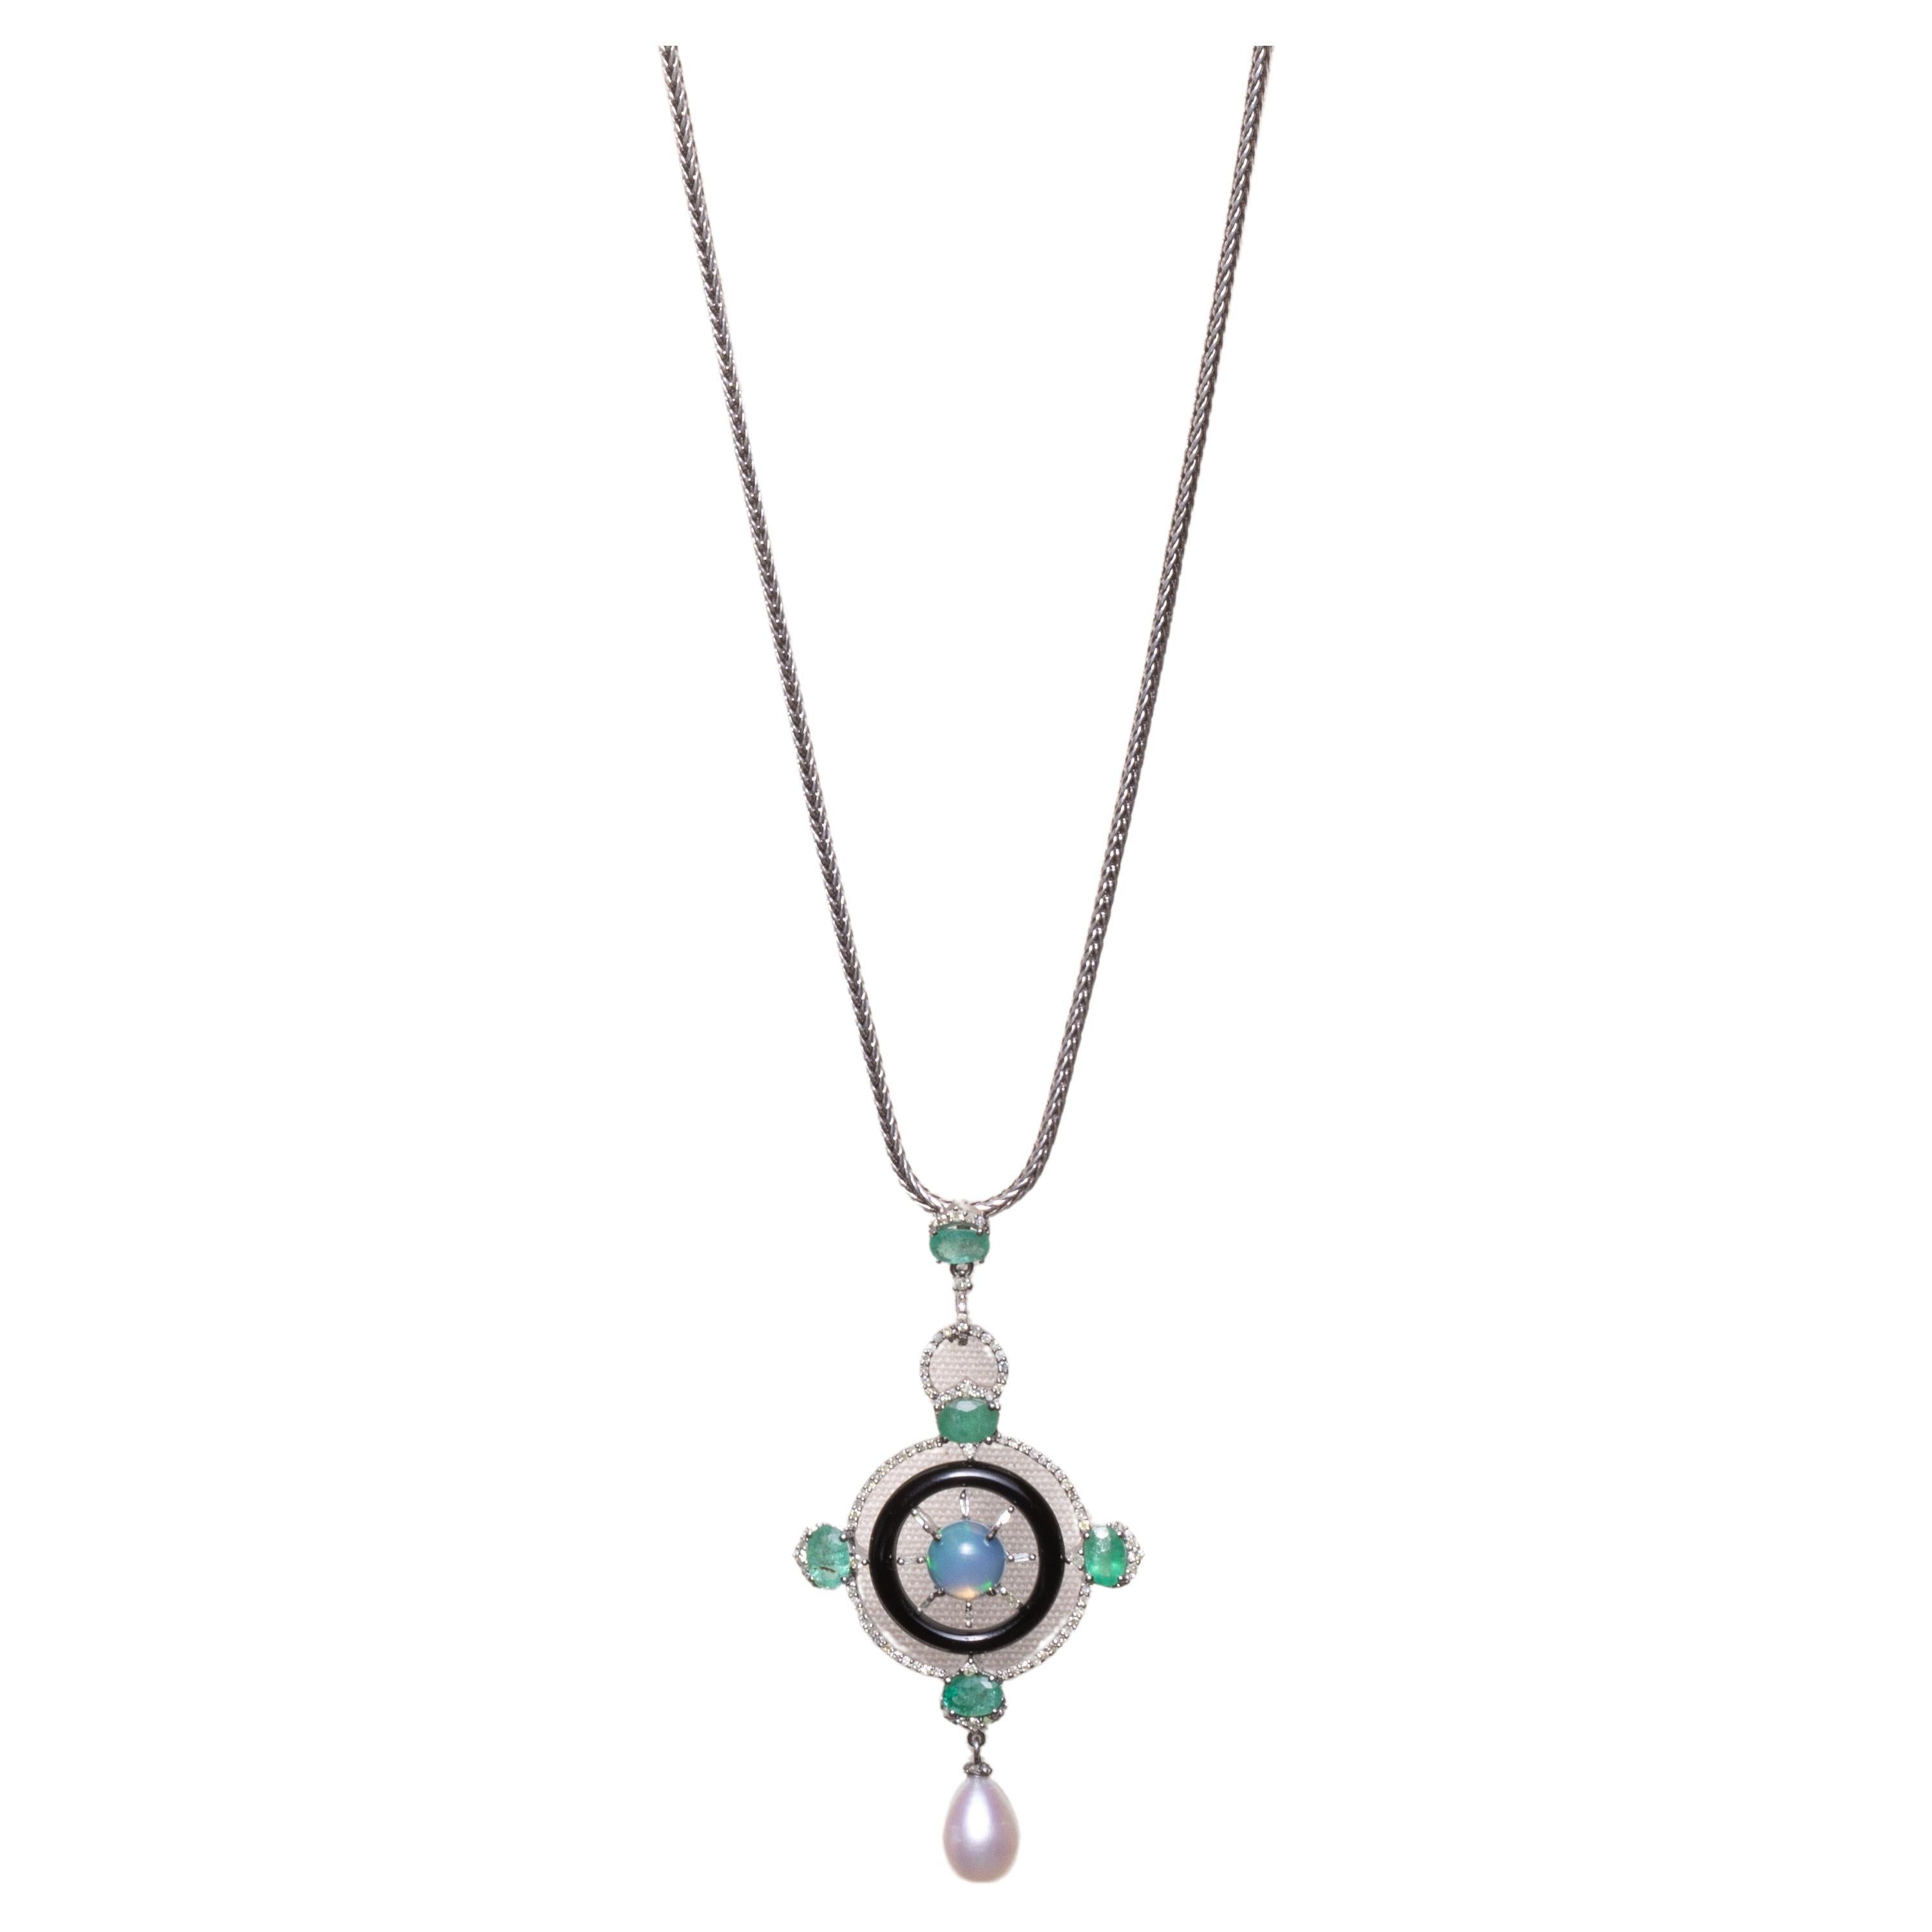 Anhänger-Halskette mit Smaragden, Diamanten, Opal und Perlen, lang oder kurz getragen